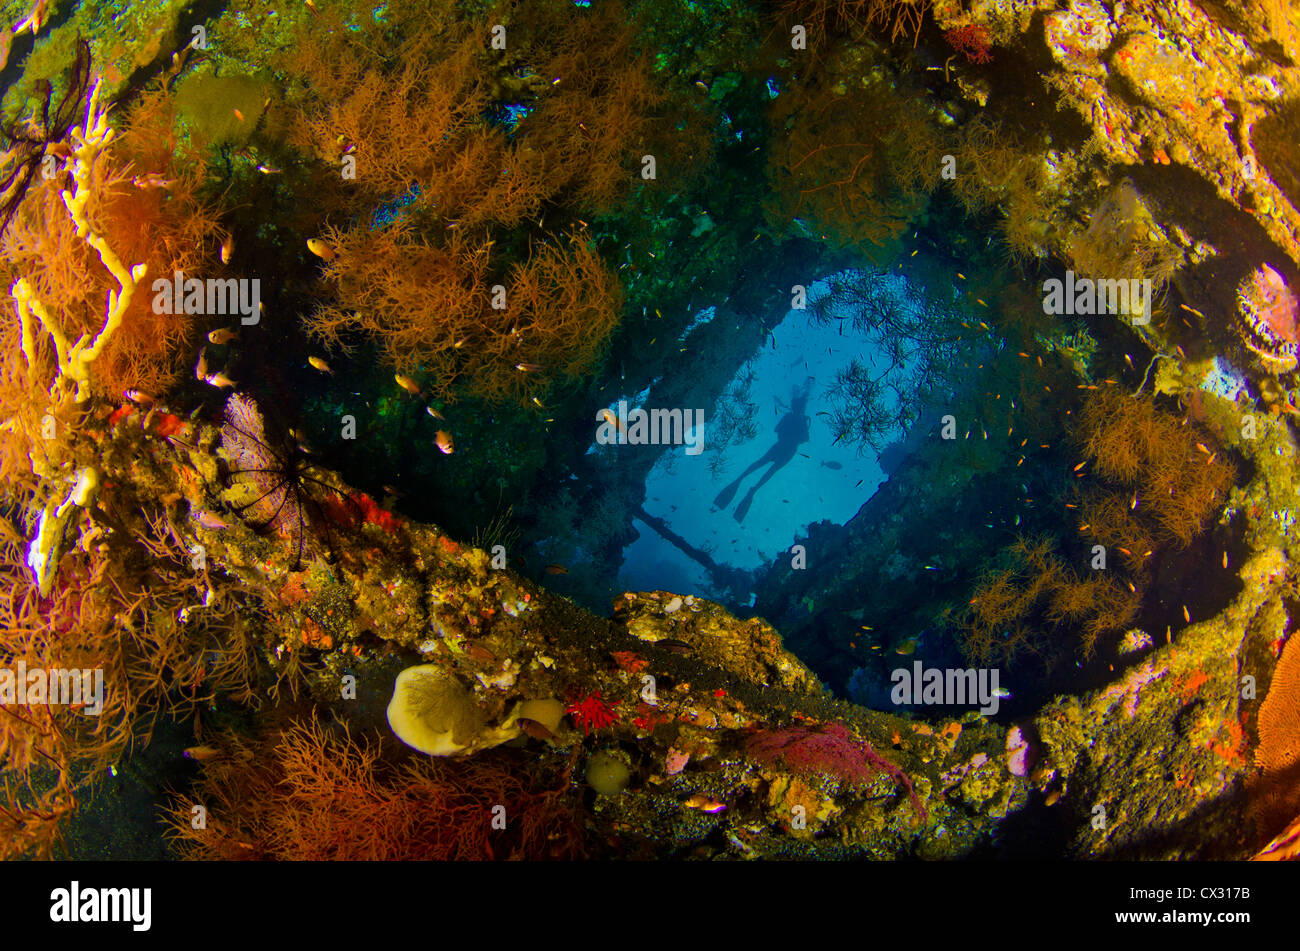 Underwater sea life, Bali, Tulamben, Indonesia, wreck, Liberty wreck, diver, female diver, silhouette, colorful, color, diving. Stock Photo